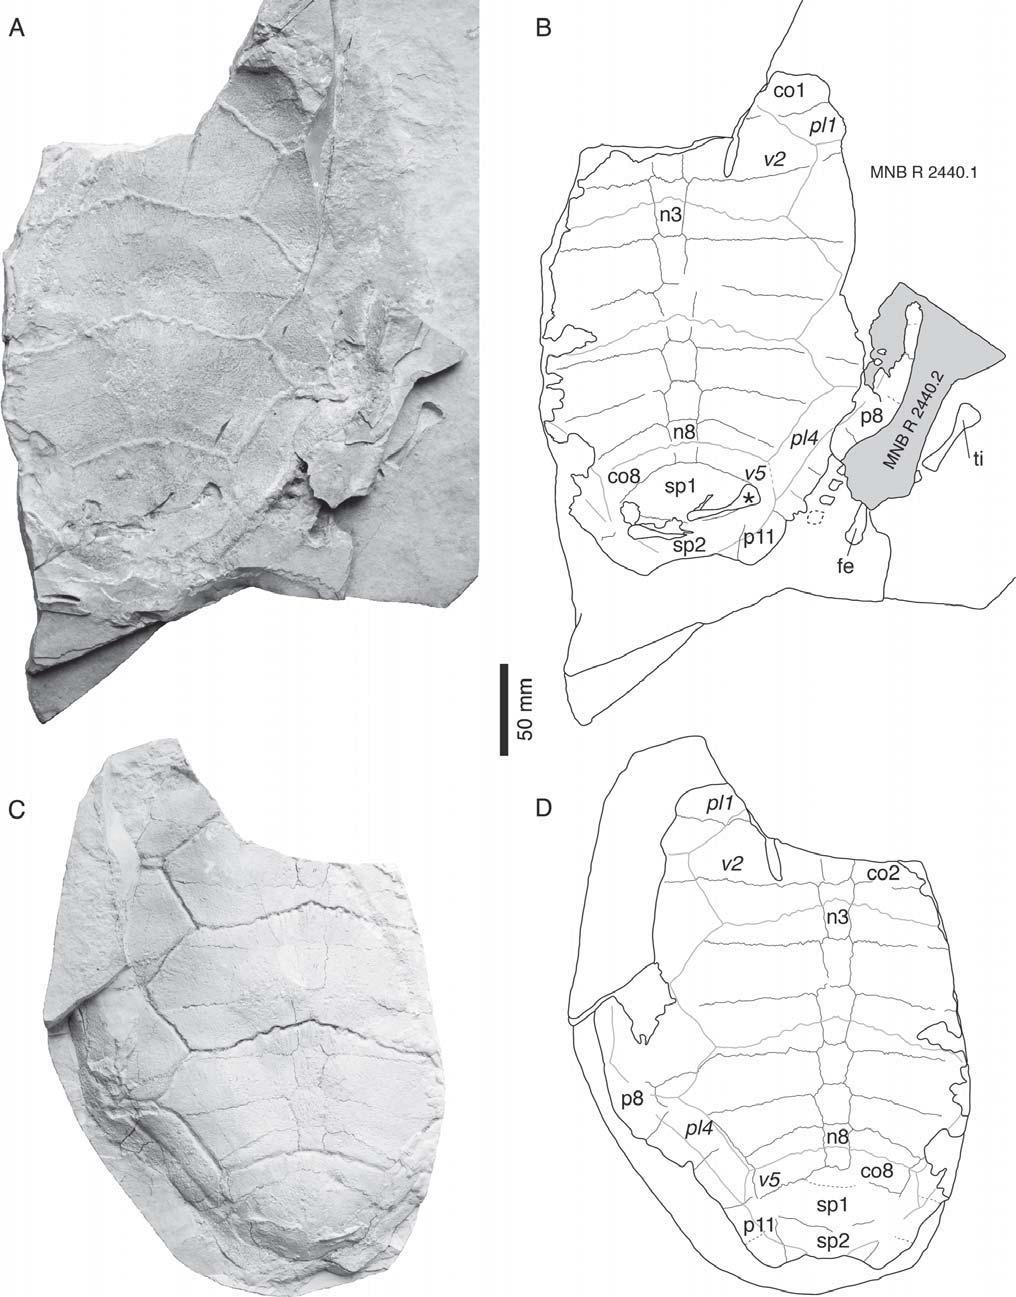 FIGURE 5. MNB R 2440 (lectotype of Acichelys redenbacheri), Eurysternum wagleri, Late Jurassic of Solnhofen, Germany. A, photograph of specimens MNB R 2440.1 and MNB R 2440.